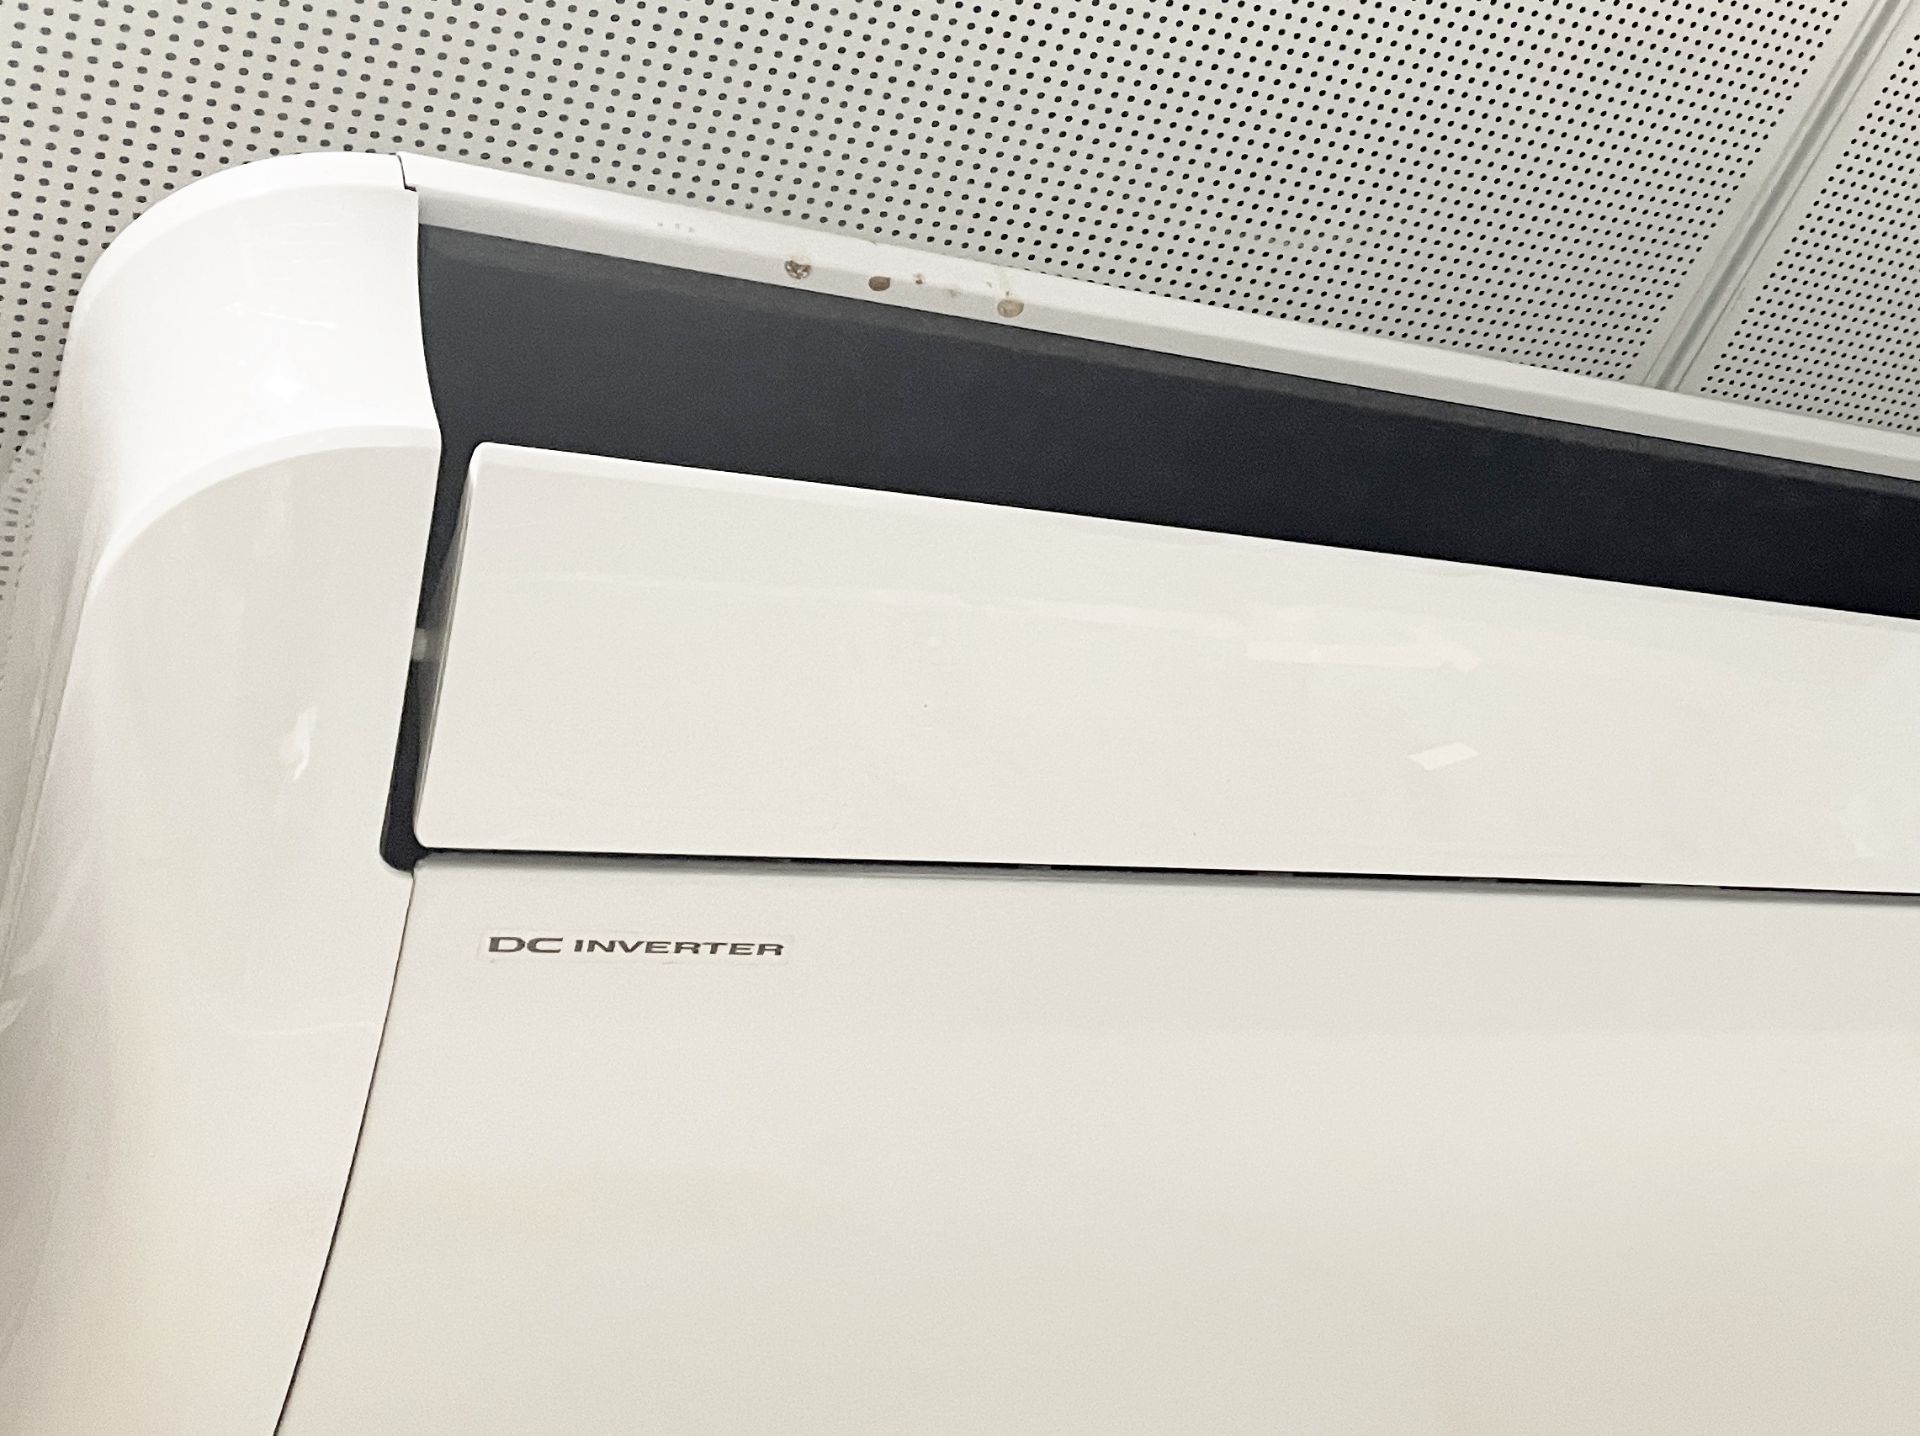 1 x Fujitsu Air Conditioning Slimline Floor Ceiling Mounted Heat Pump Inverter - Image 3 of 5